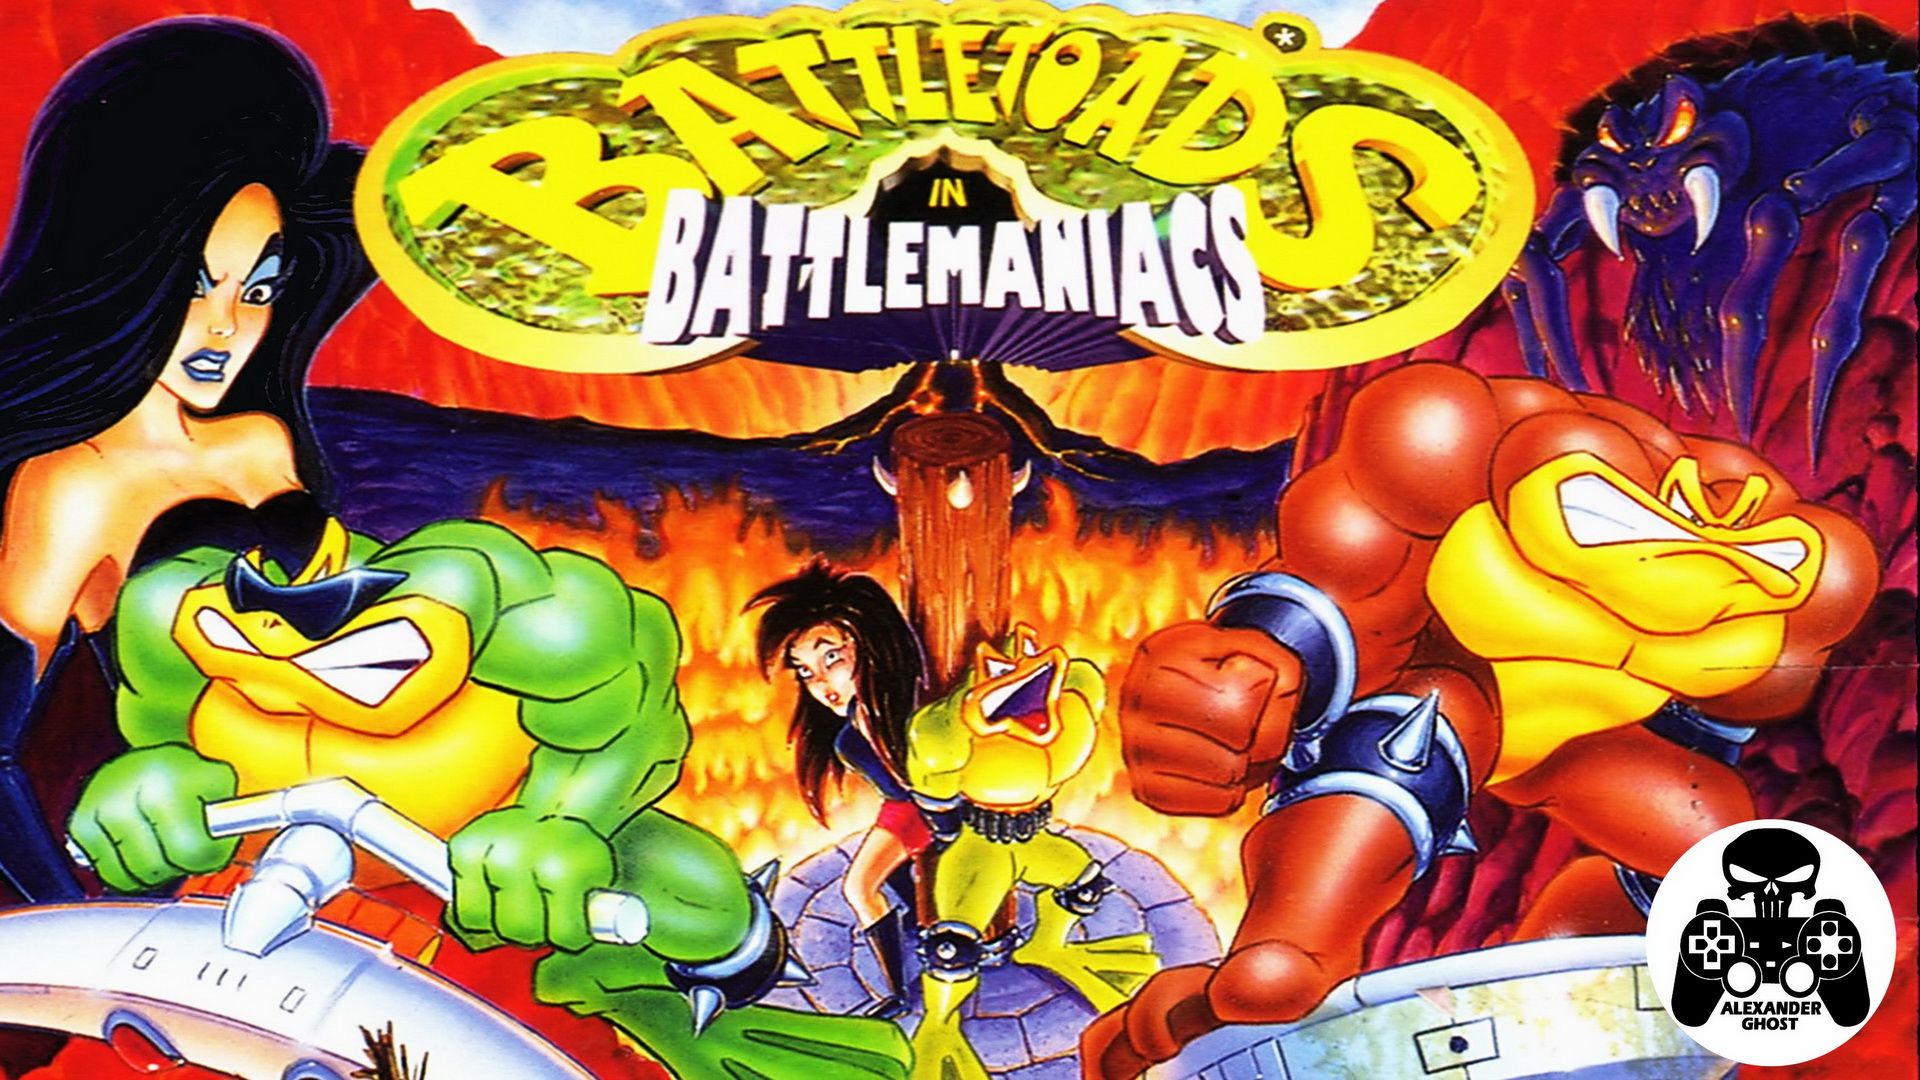 Battletoads персонажи. Battletoads in Battlemaniacs. Battletoads фигурки. Battletoads 1991